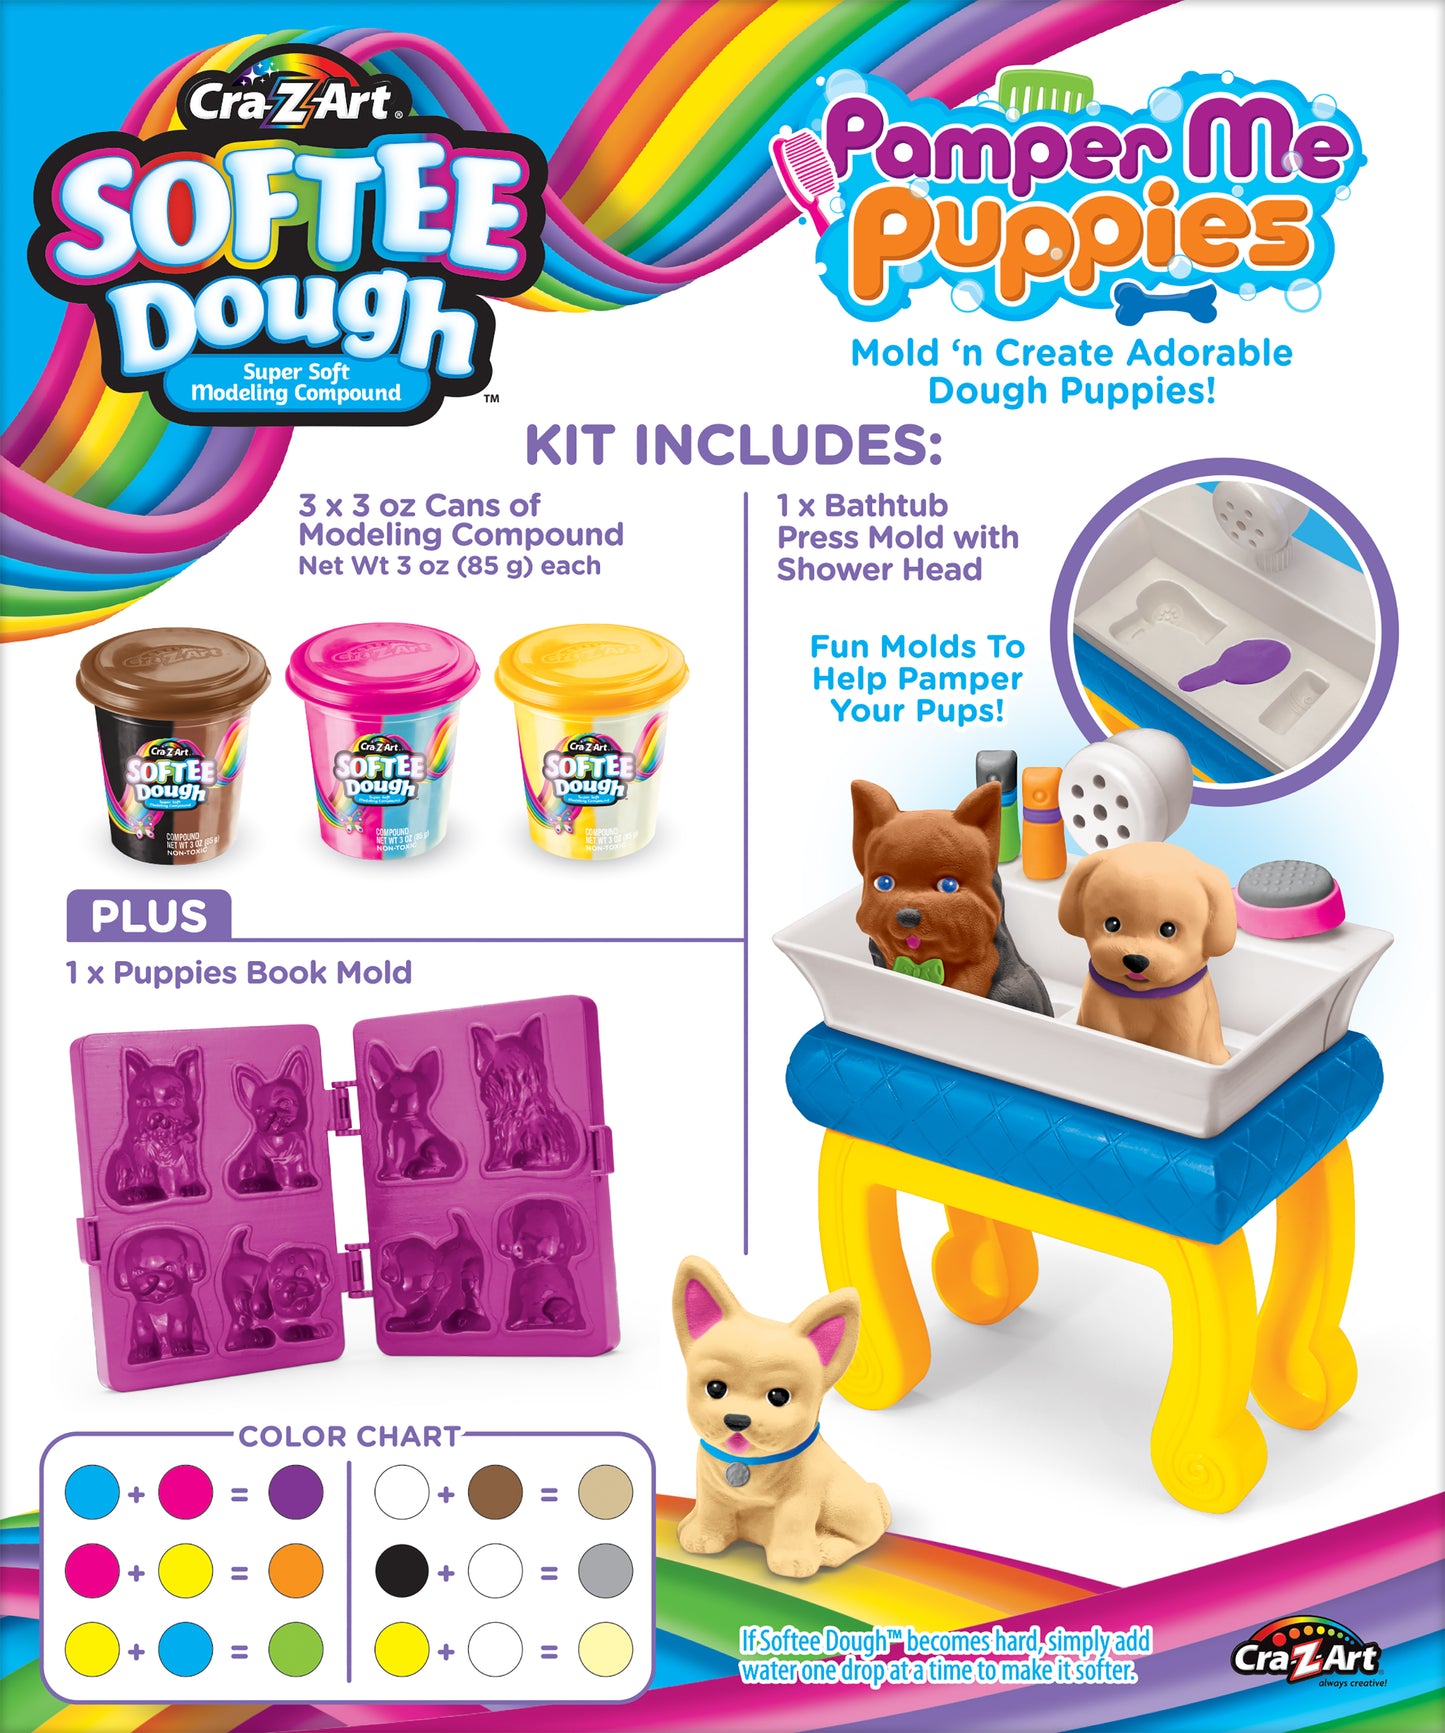 Cra-Z-Art Softee Dough Pamper Me Puppies, 1 Multicolor Dough Set